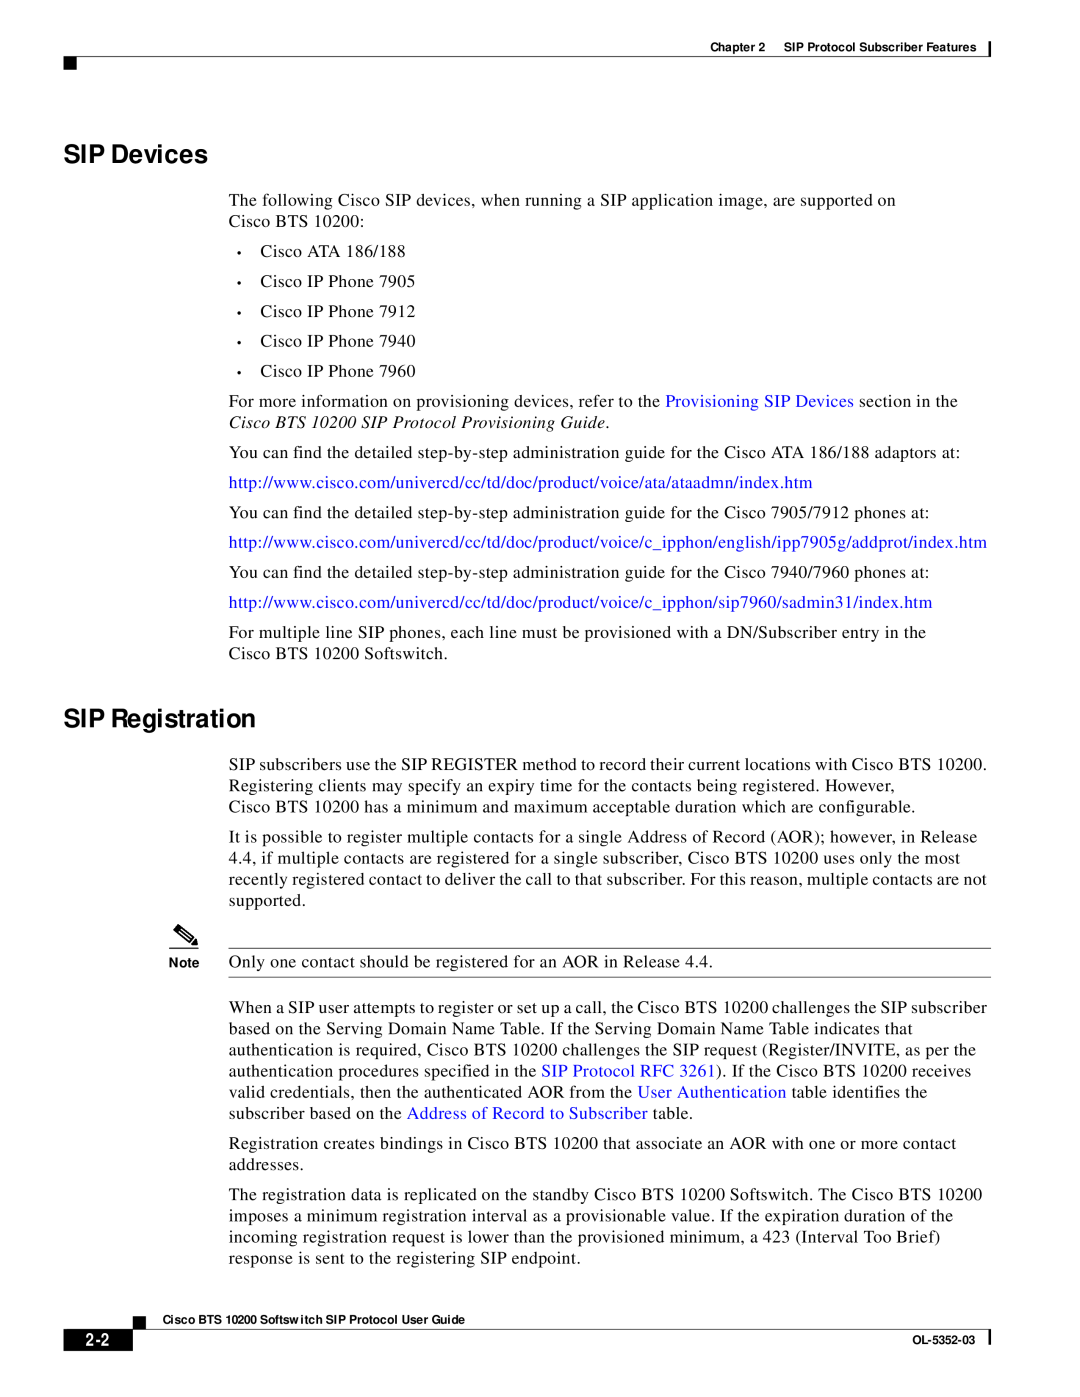 Cisco Systems BTS 10200 manual SIP Devices, SIP Registration 